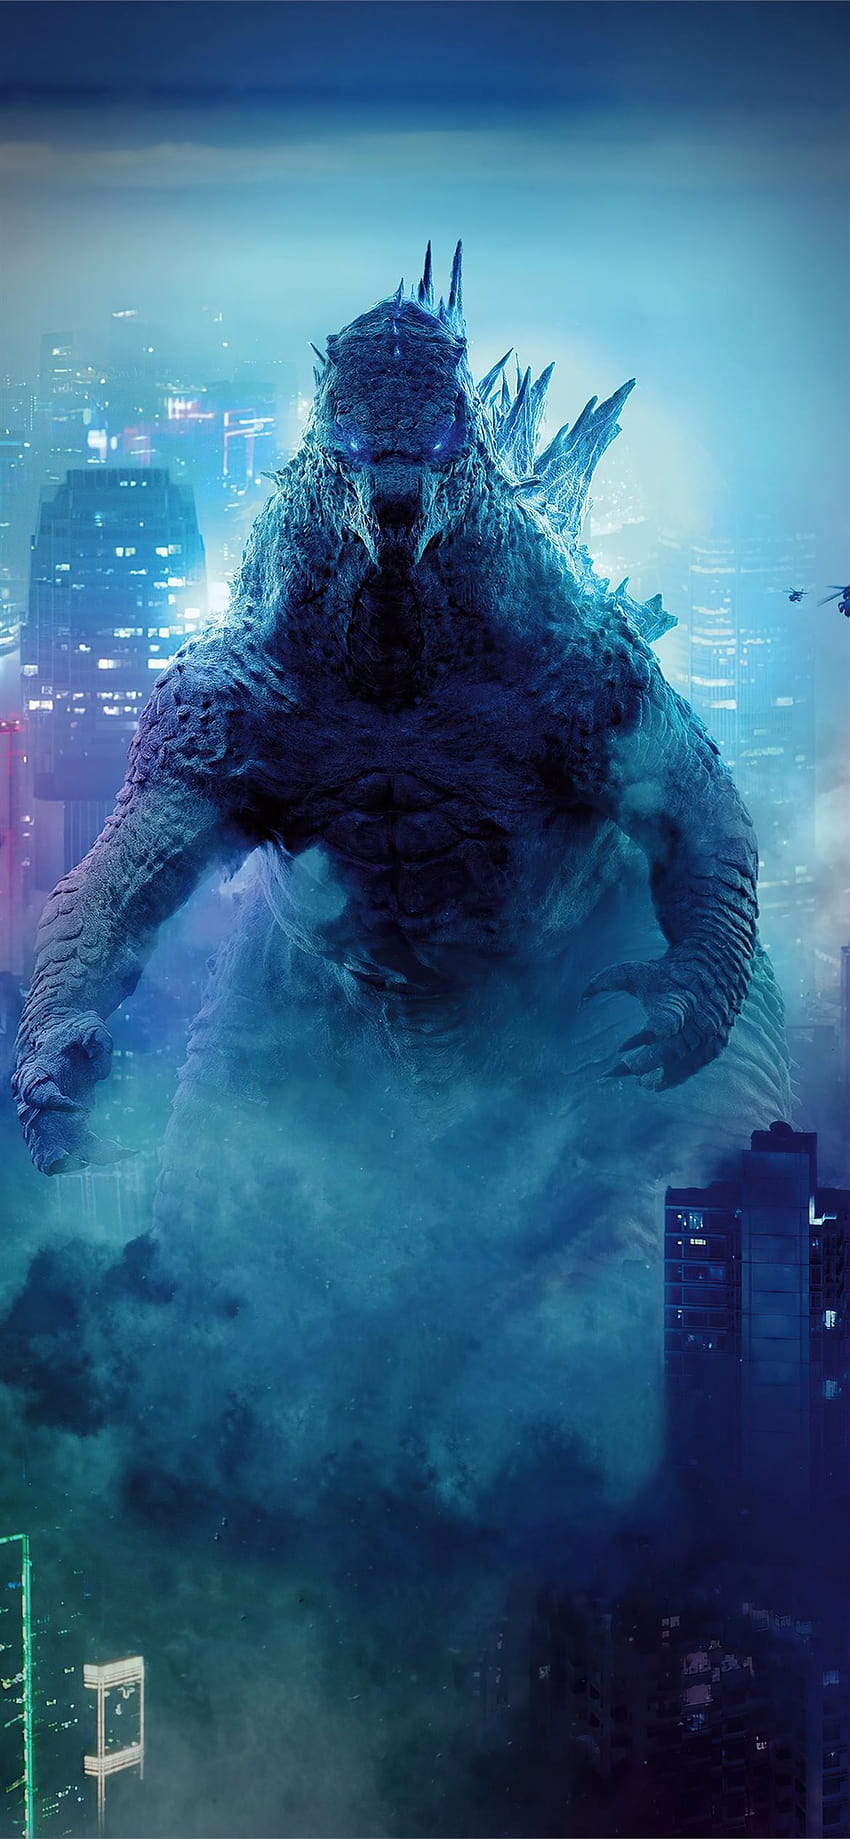 Godzilla vs kong iPhone 12 terbaik, king kong vs godzilla iphone wallpaper ponsel HD